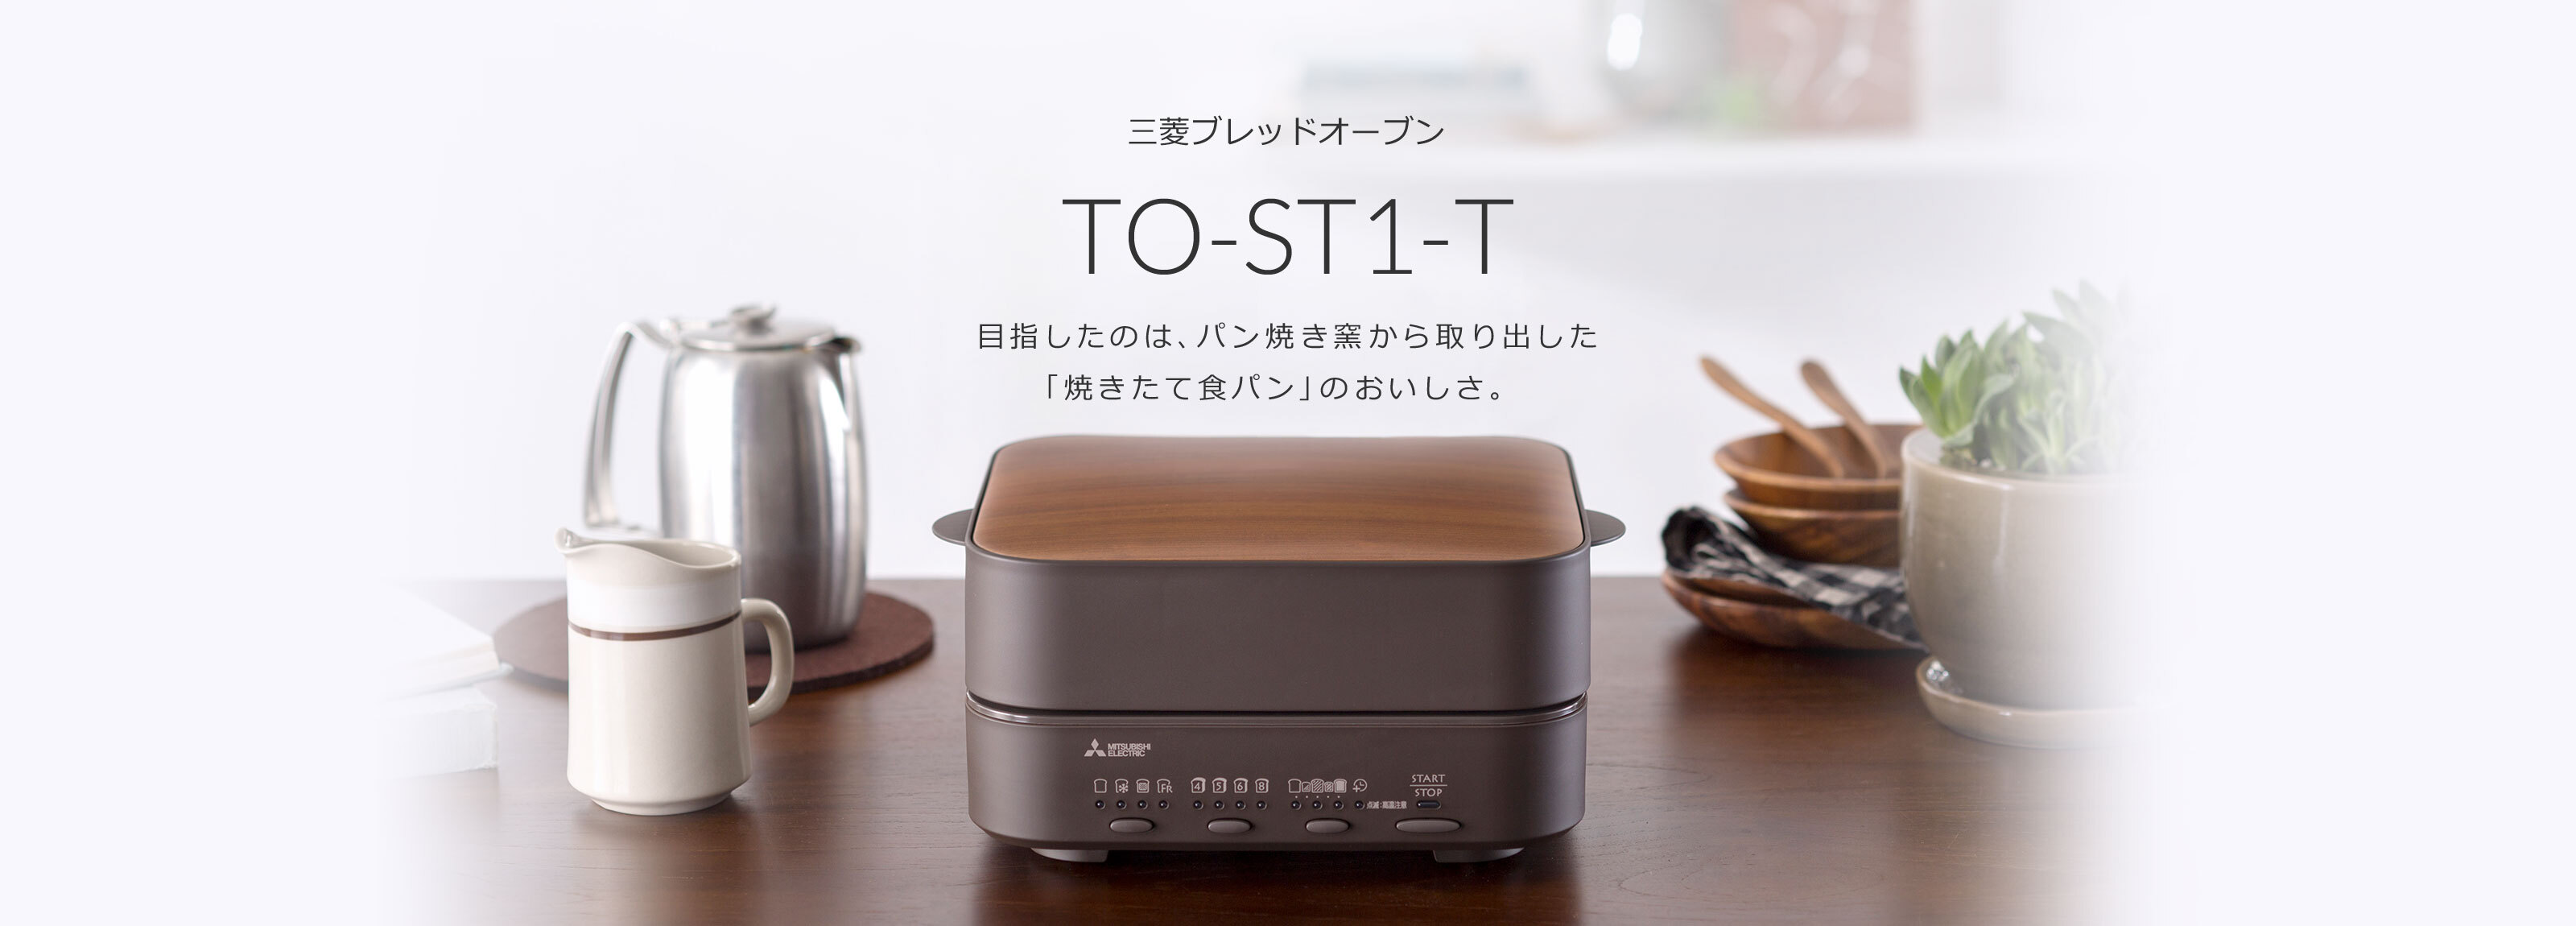 MITSUBISHI ブレッドオーブン TO-ST1-T